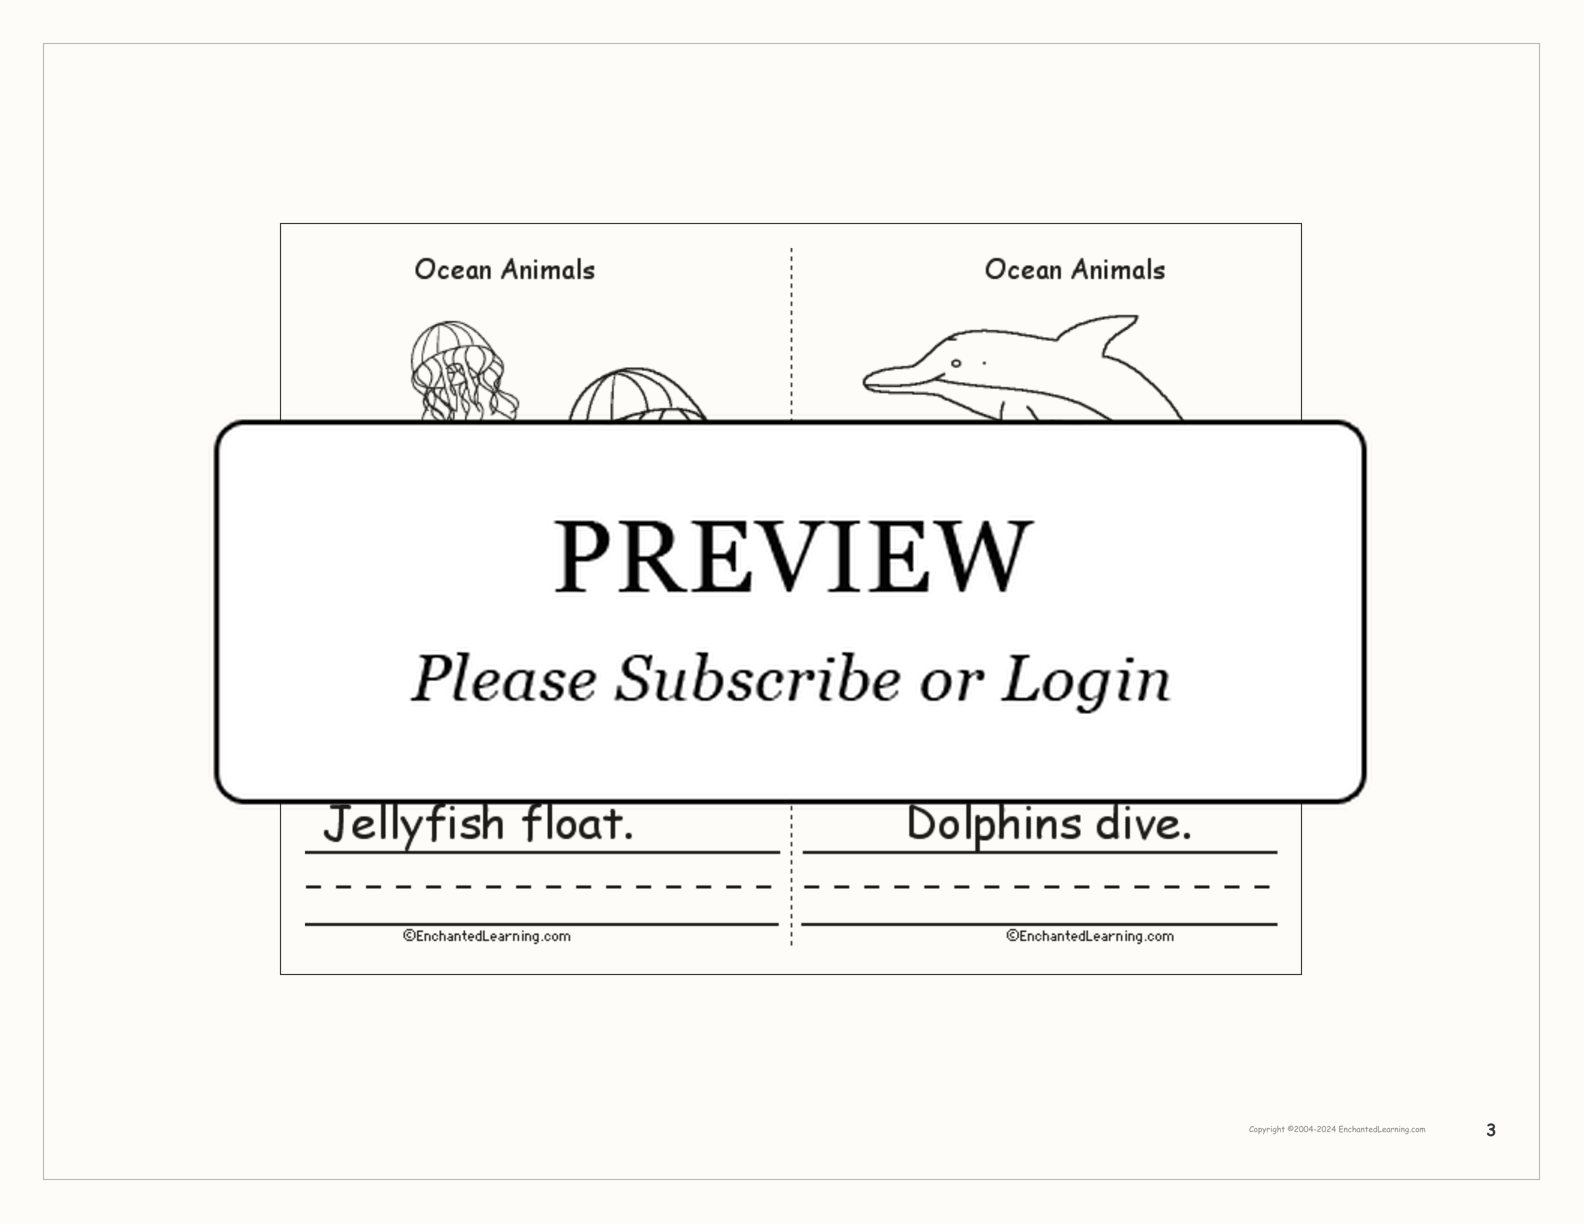 Ocean Animals Book interactive worksheet page 3